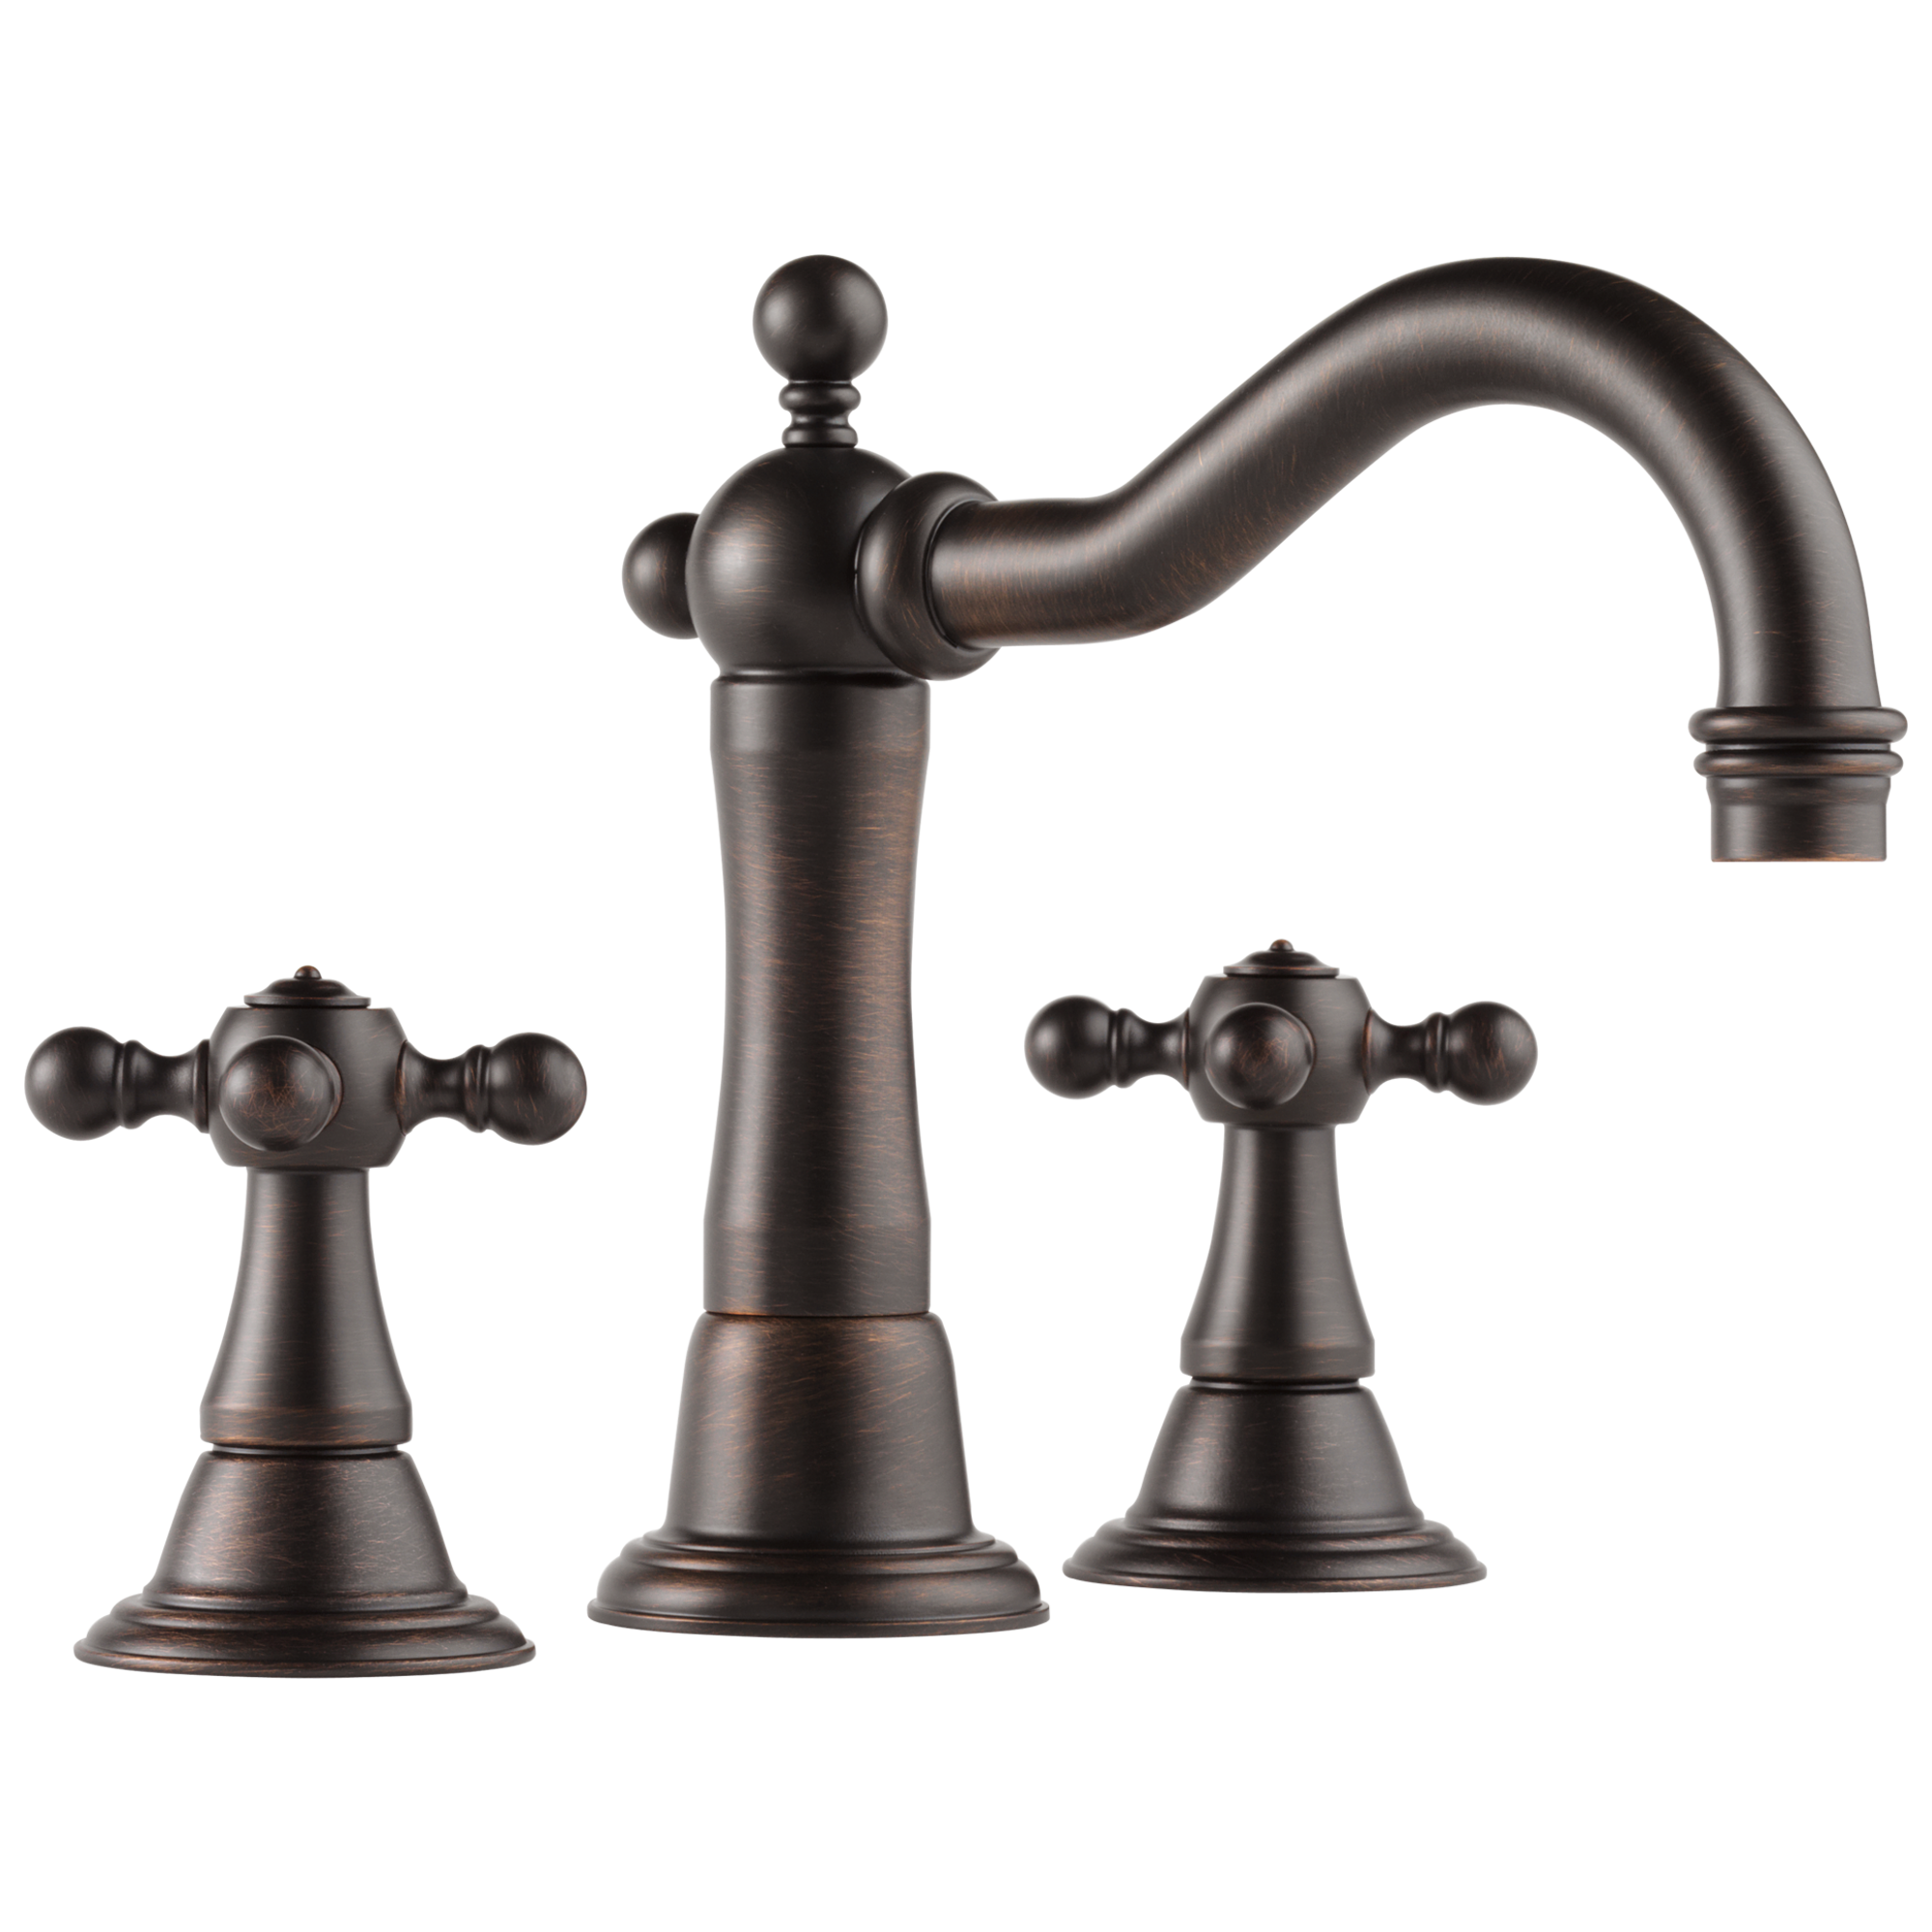 venetian bronze lavatory faucet